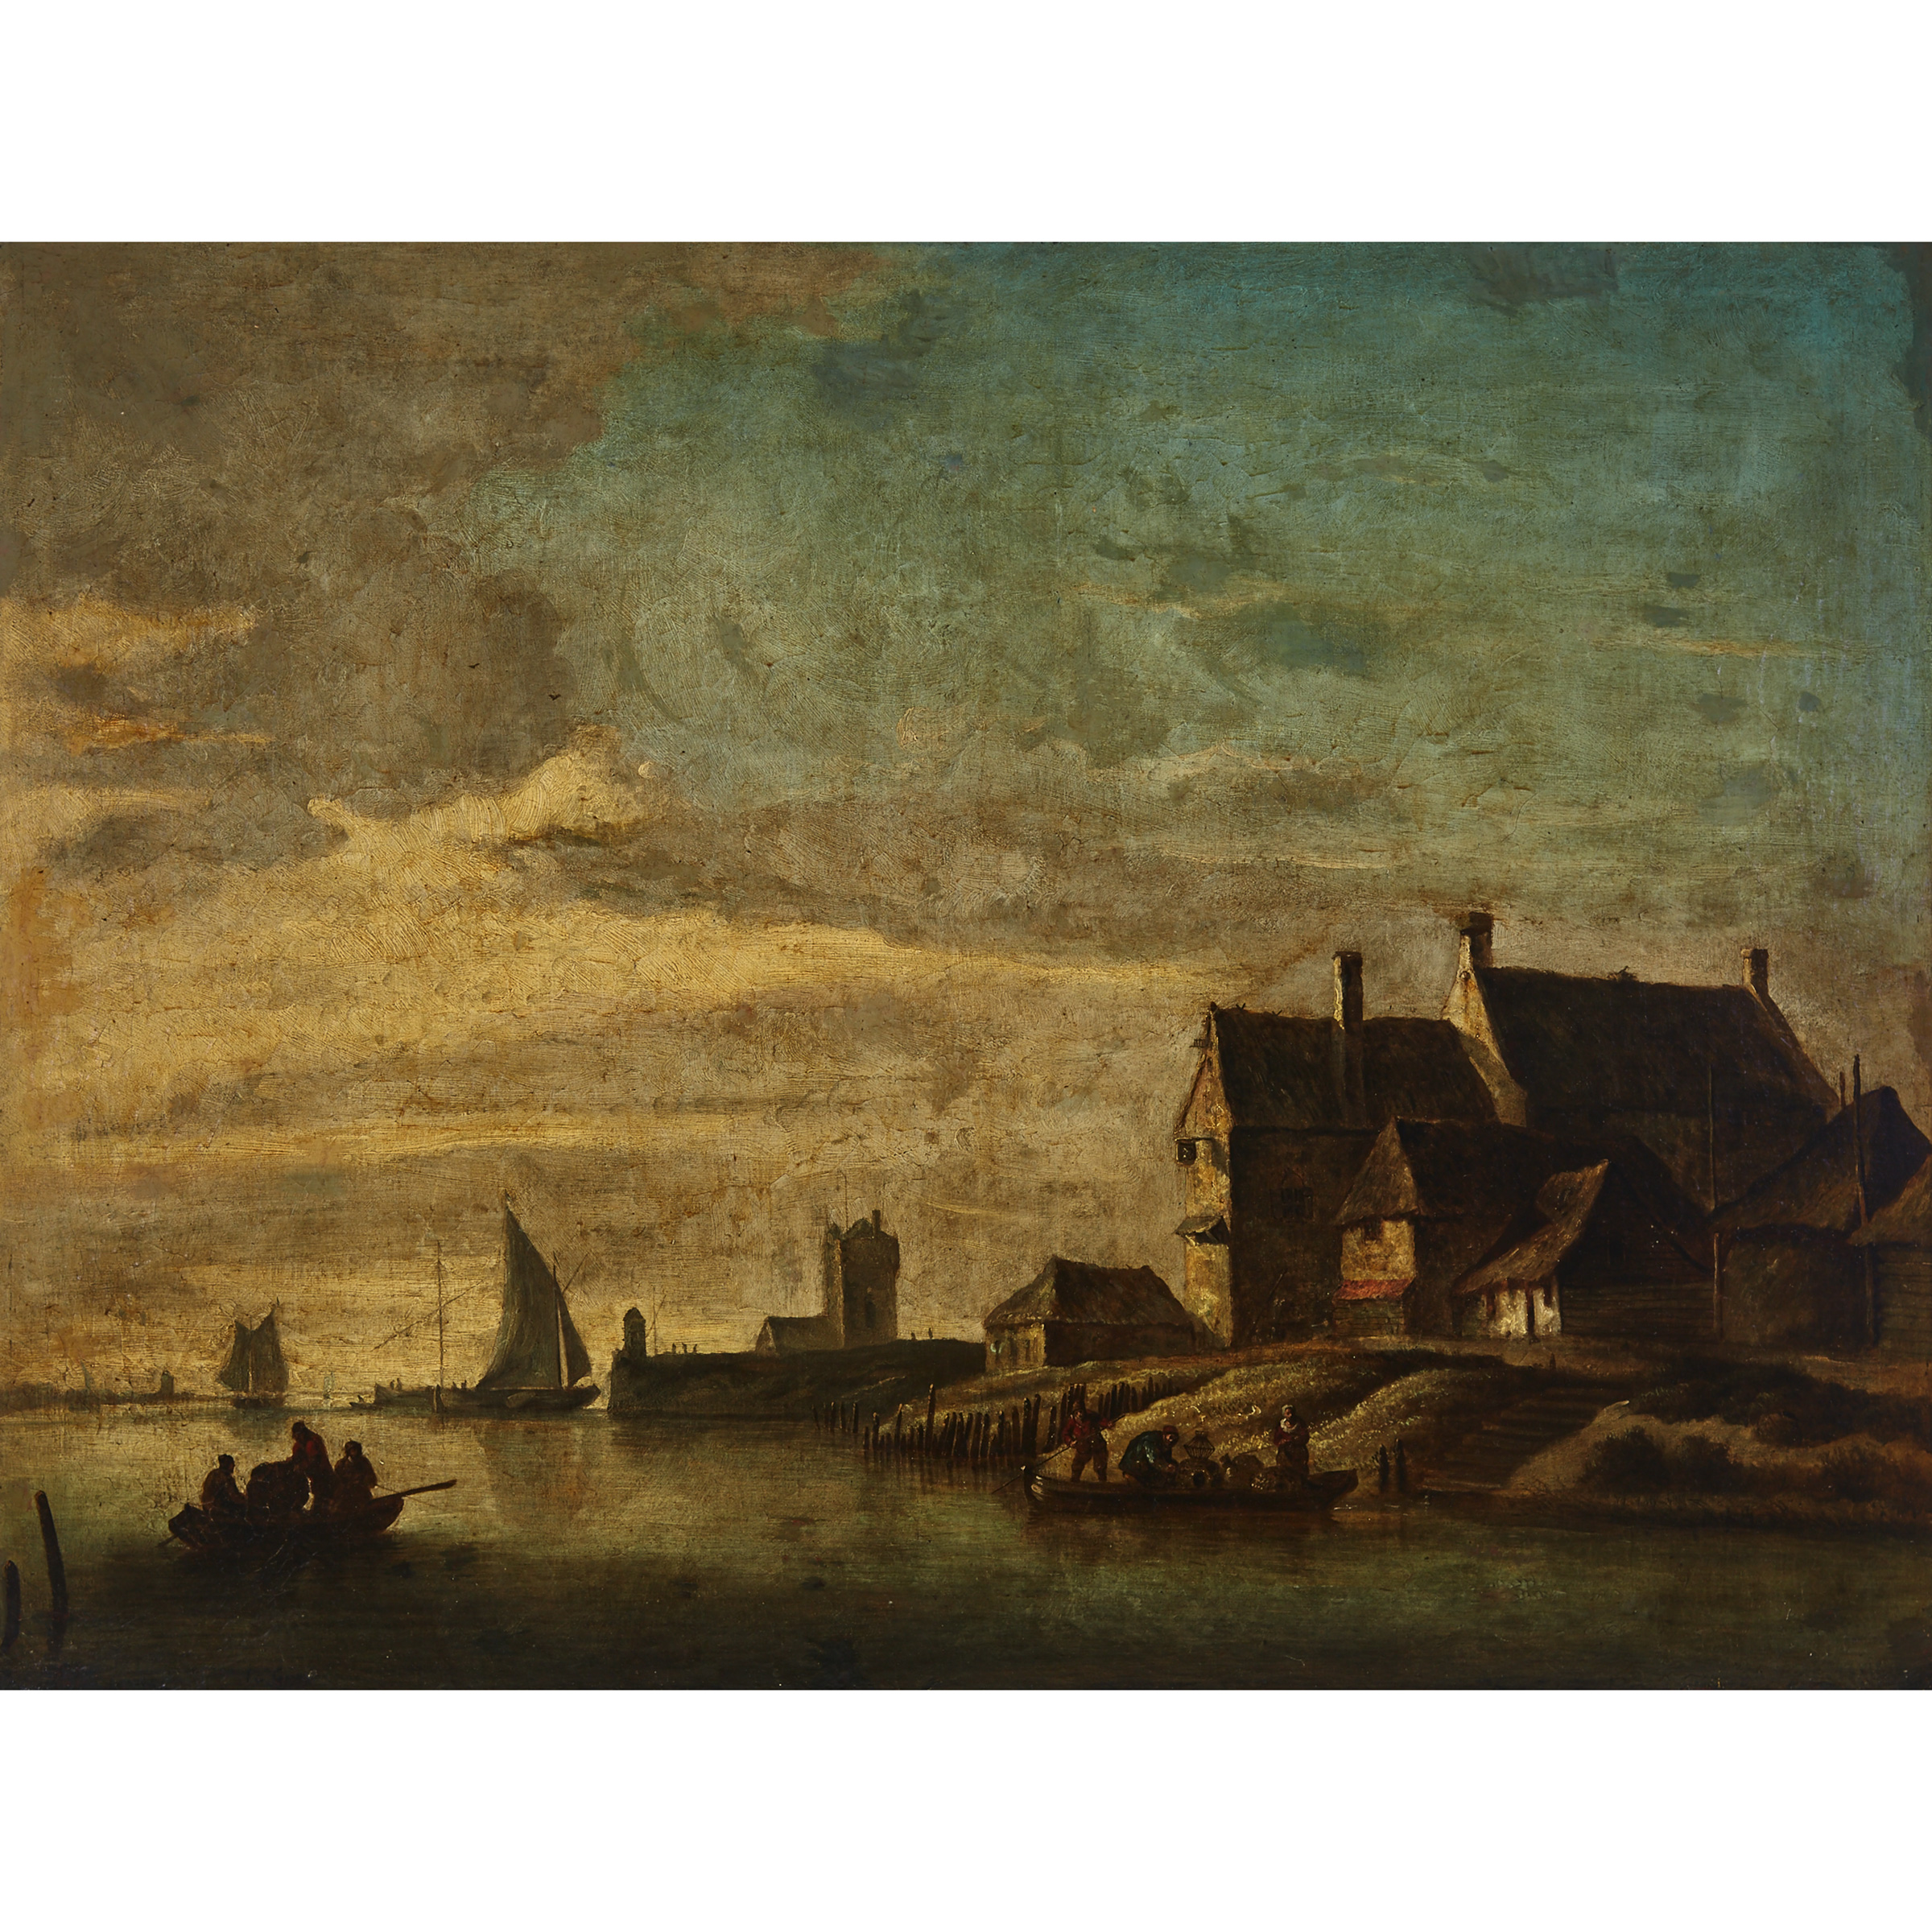 Attributed to Jan van Goyen (1596-1656)